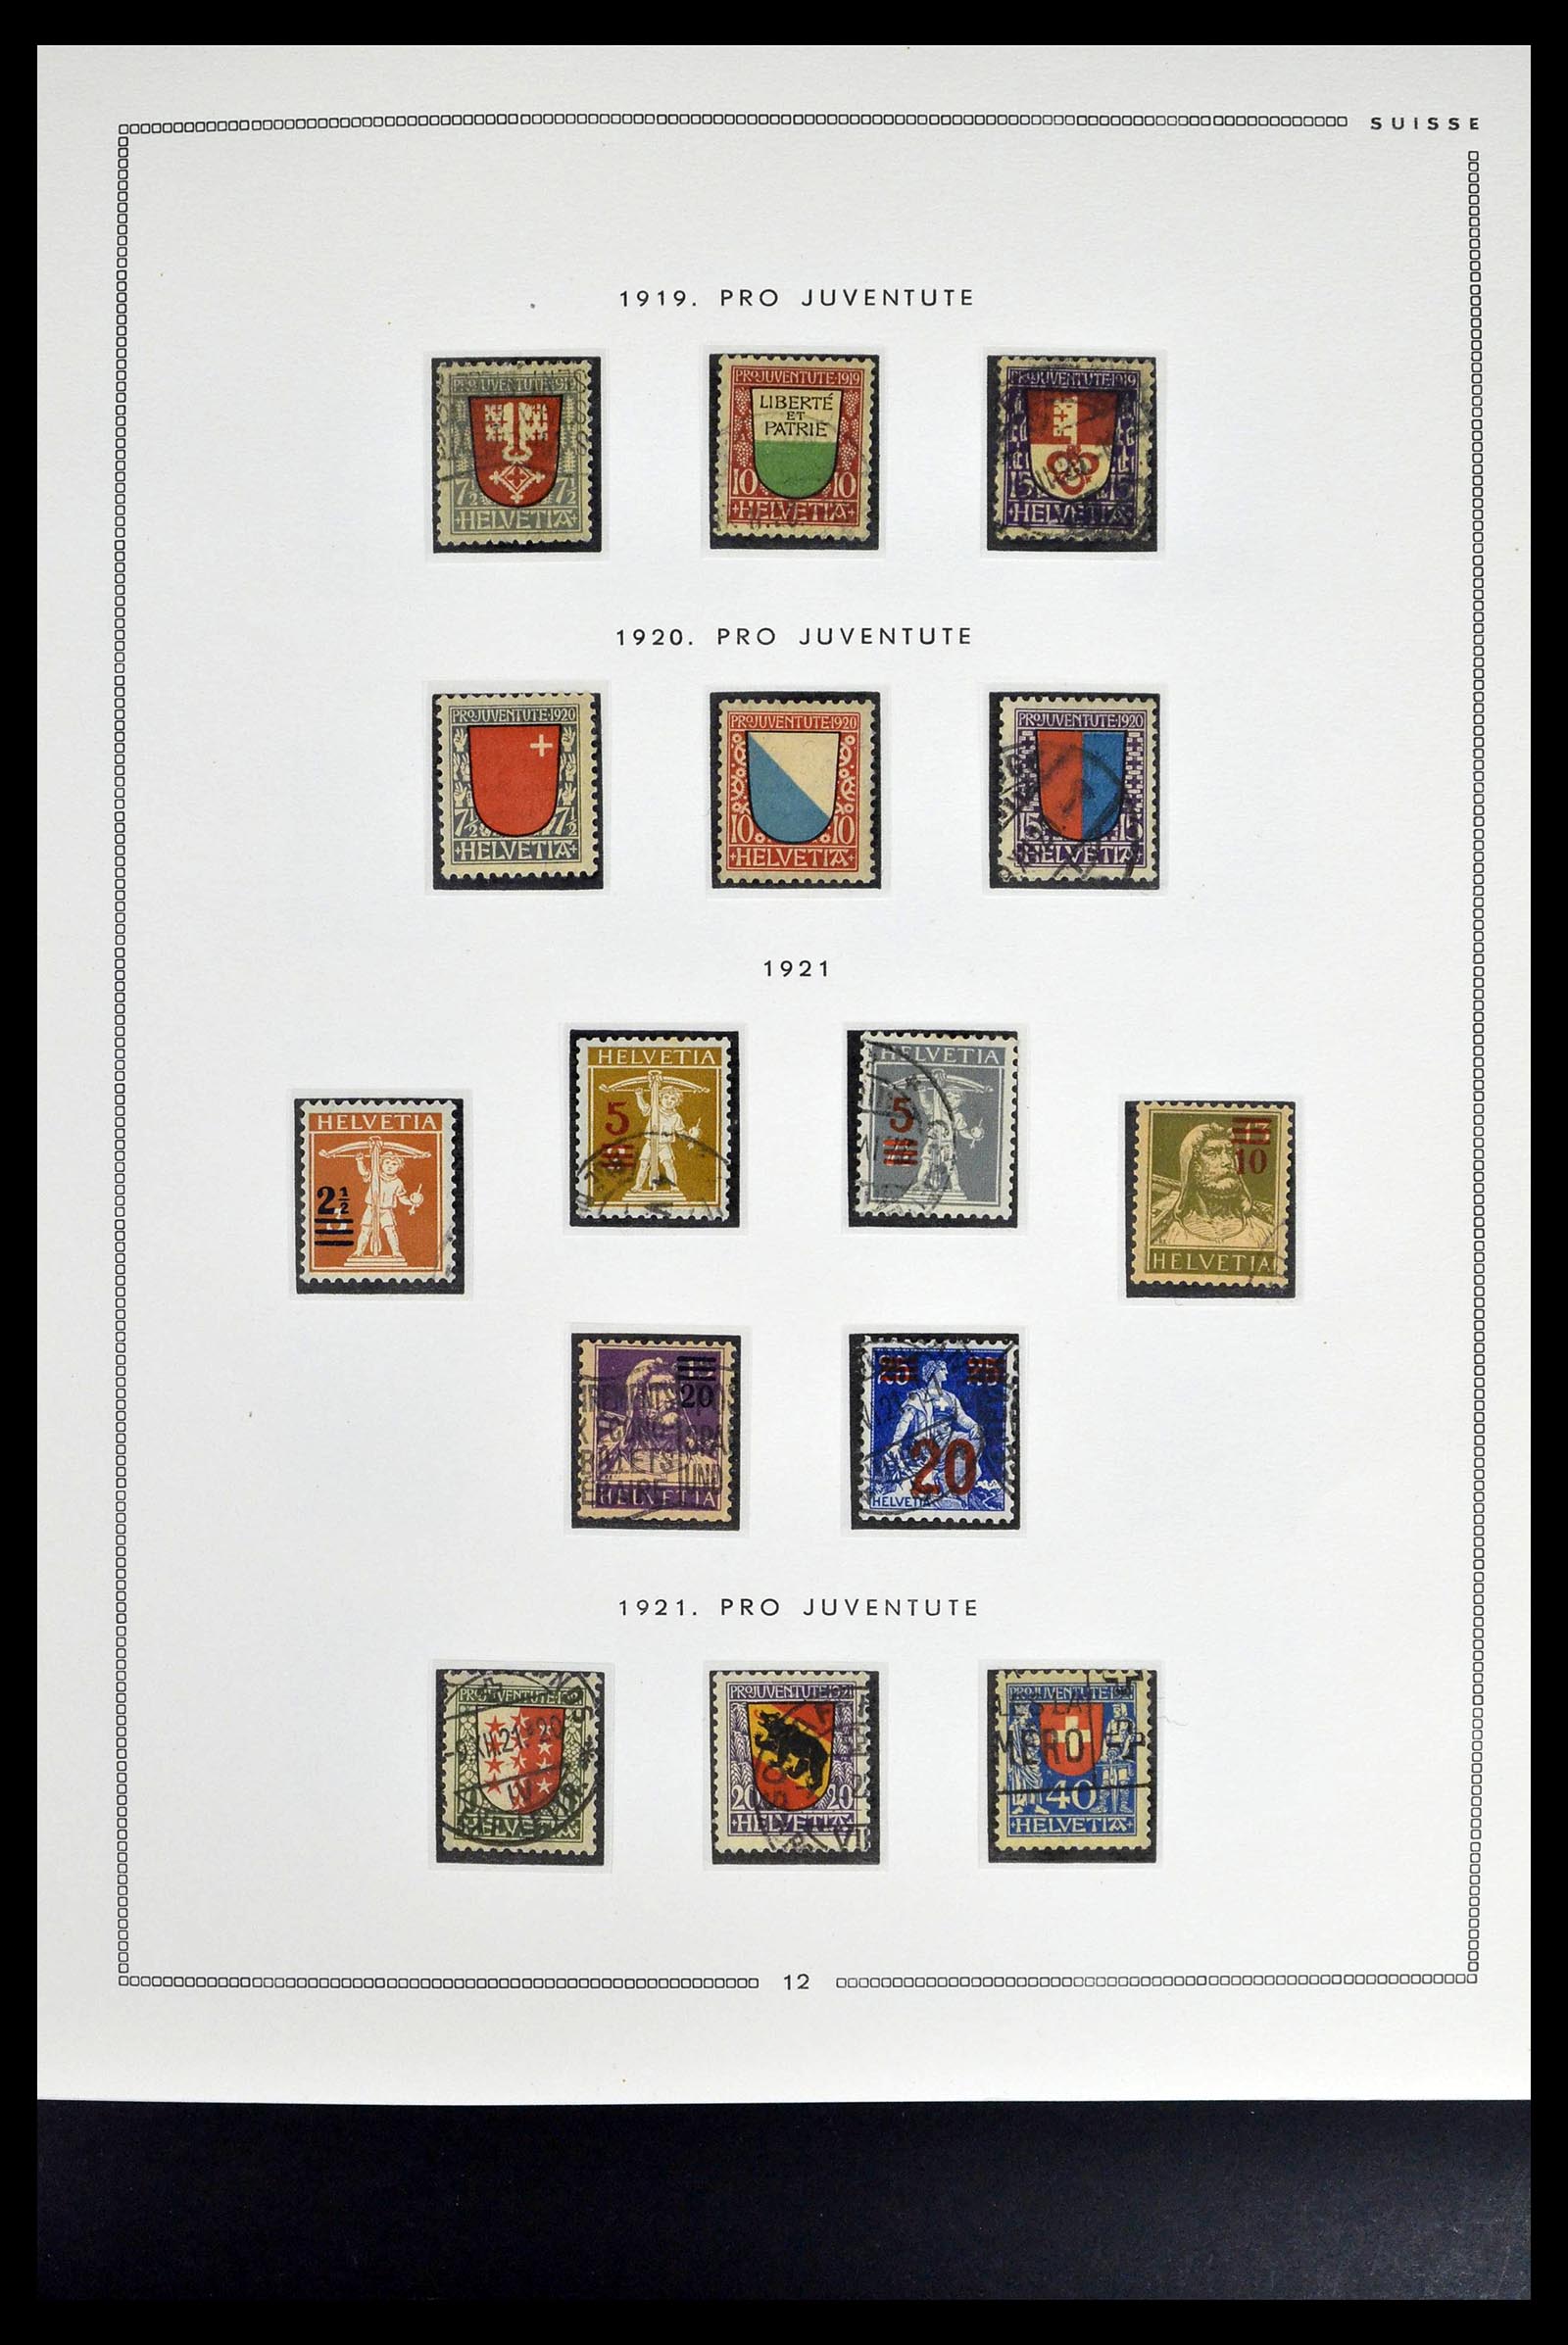 39094 0011 - Stamp collection 39094 Switzerland 1850-2005.